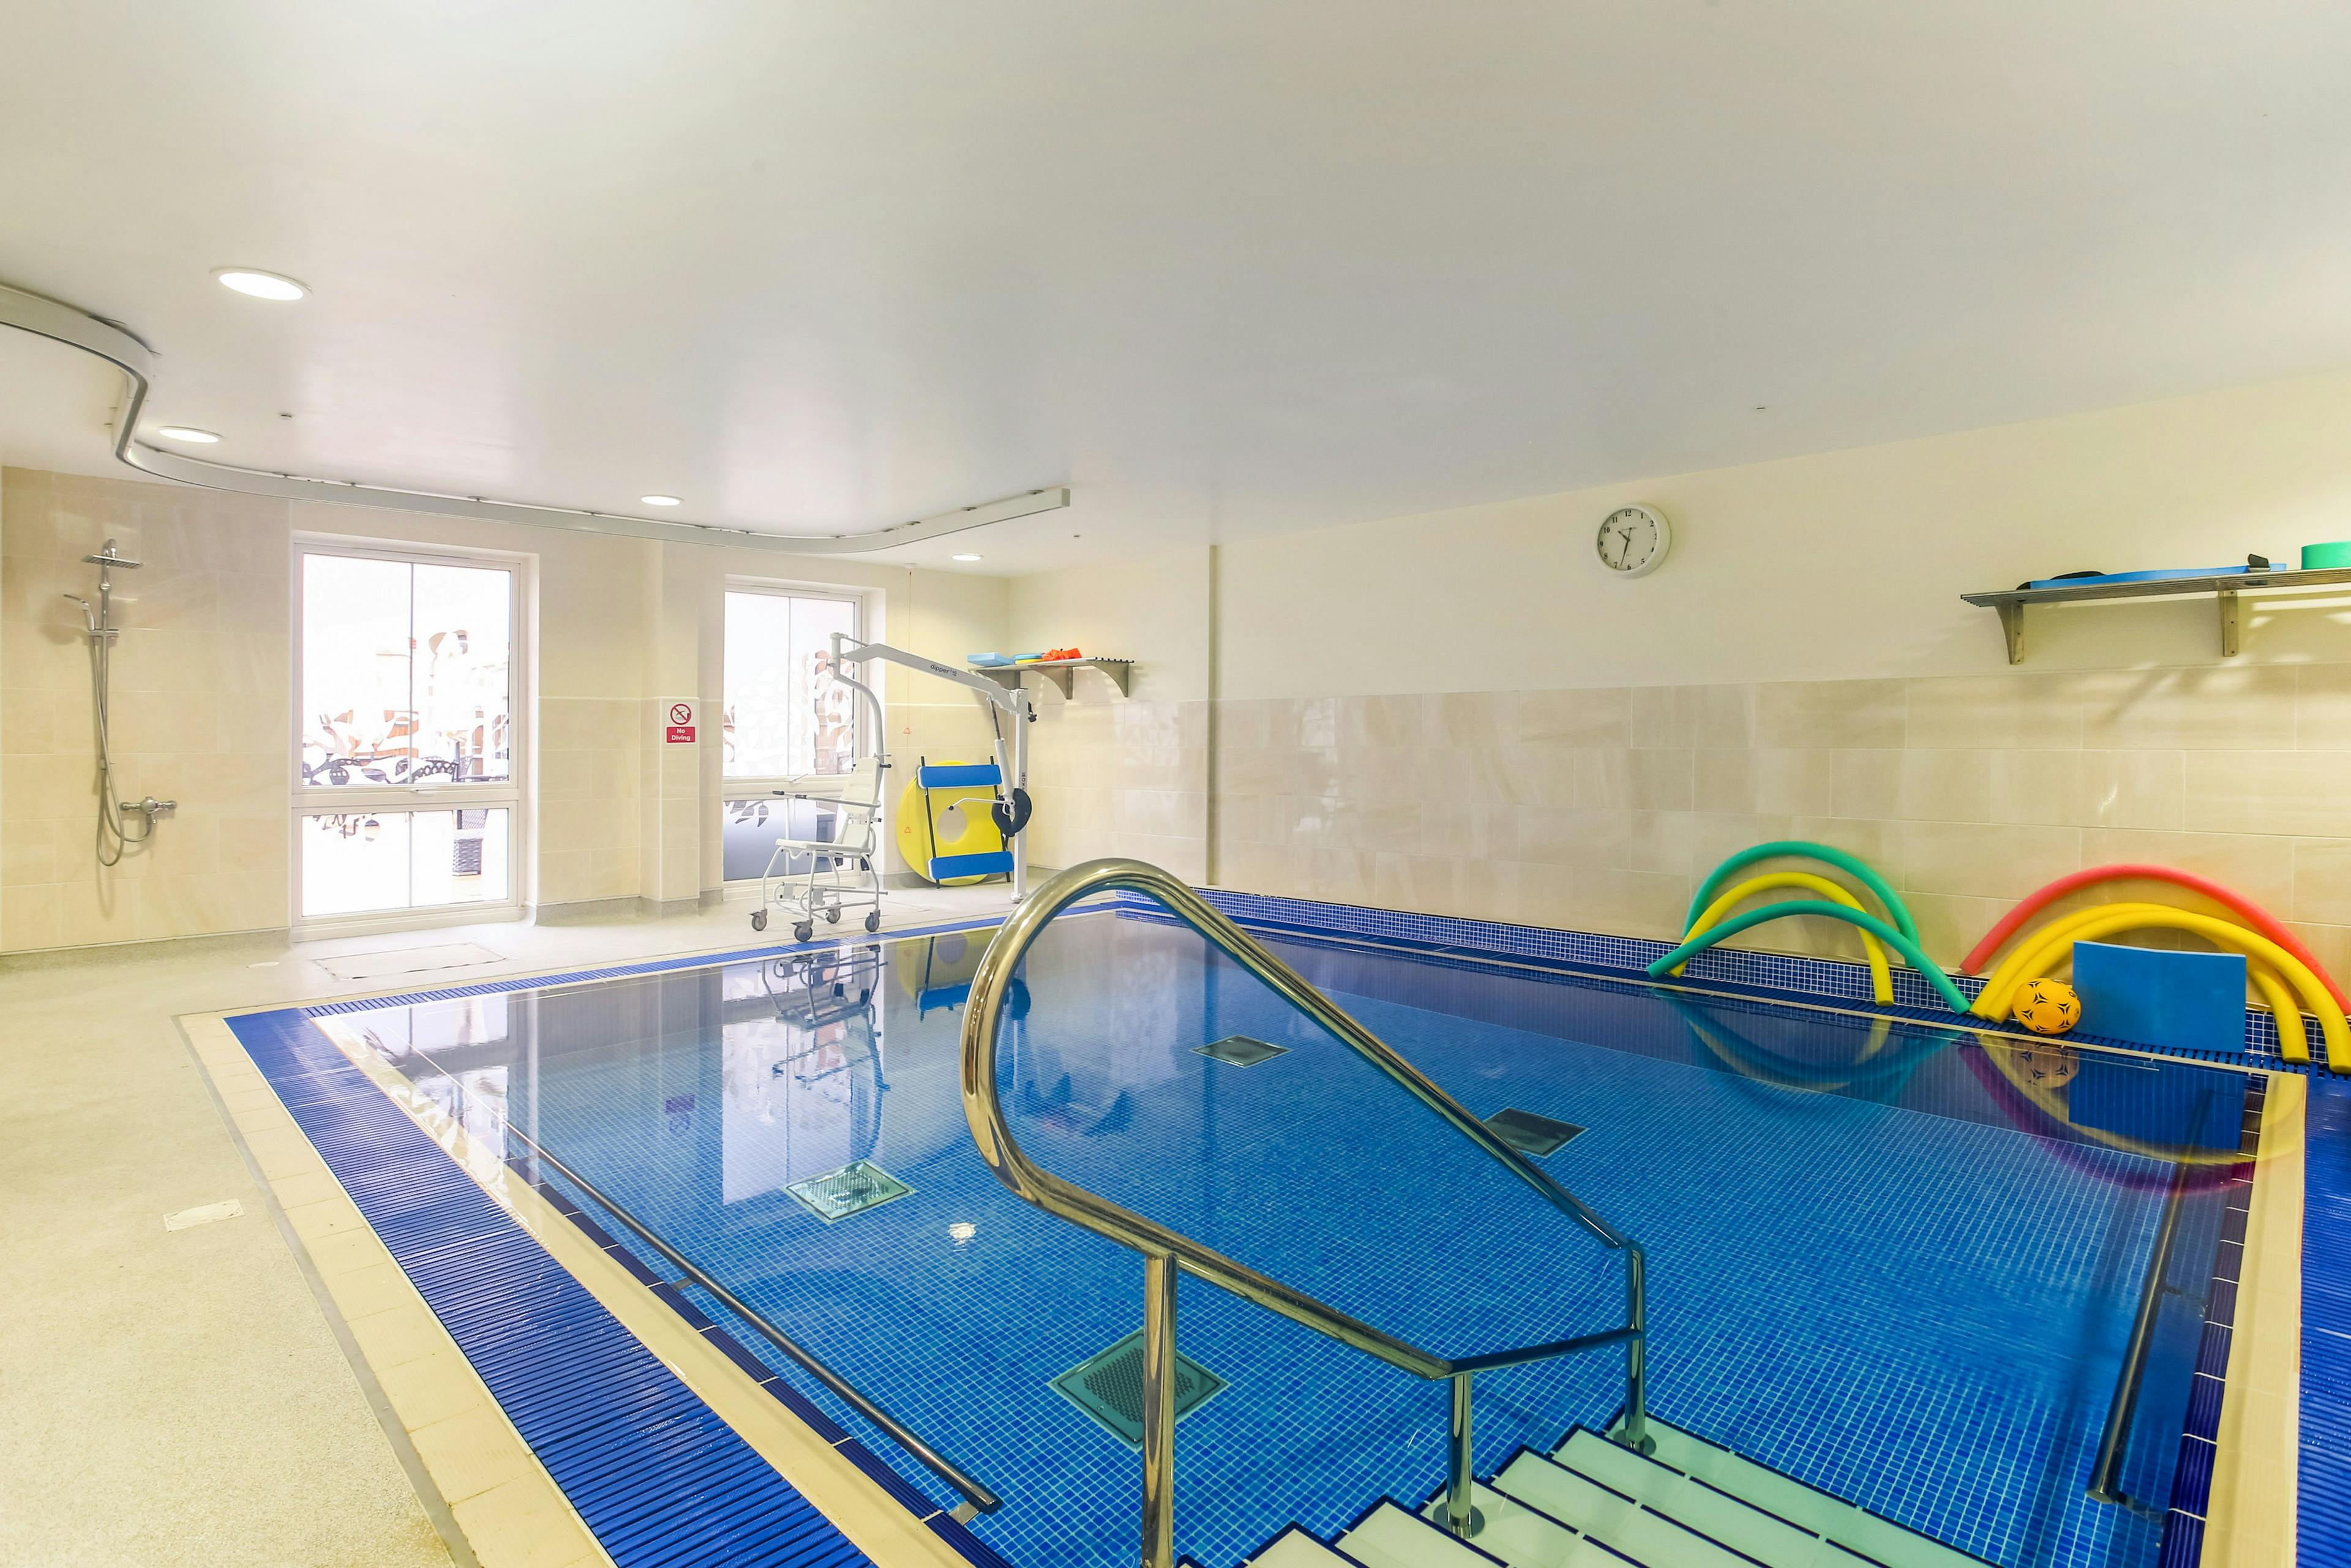 Swimming pool of Lynwood care home in Ascot, Berkshire